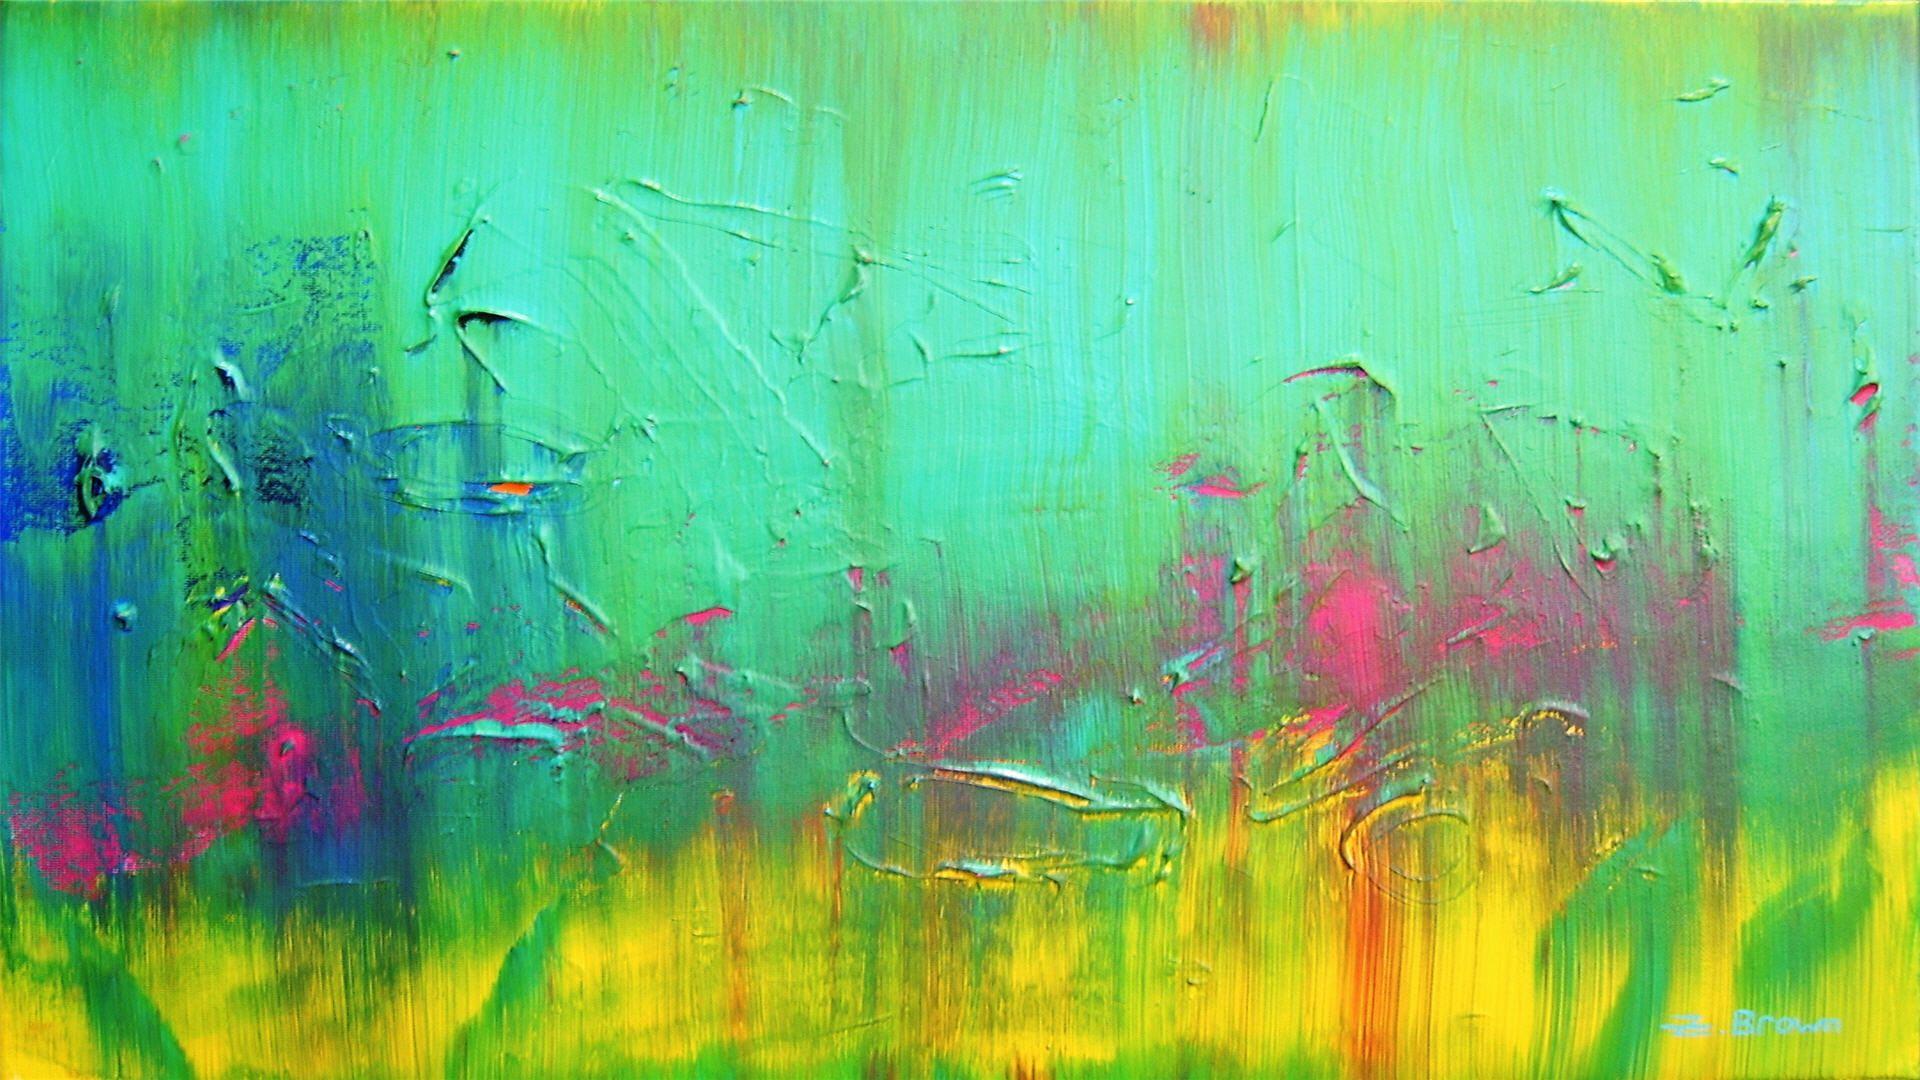 Painting Abstract Wallpaper, HD Painting Abstract Wallpaper